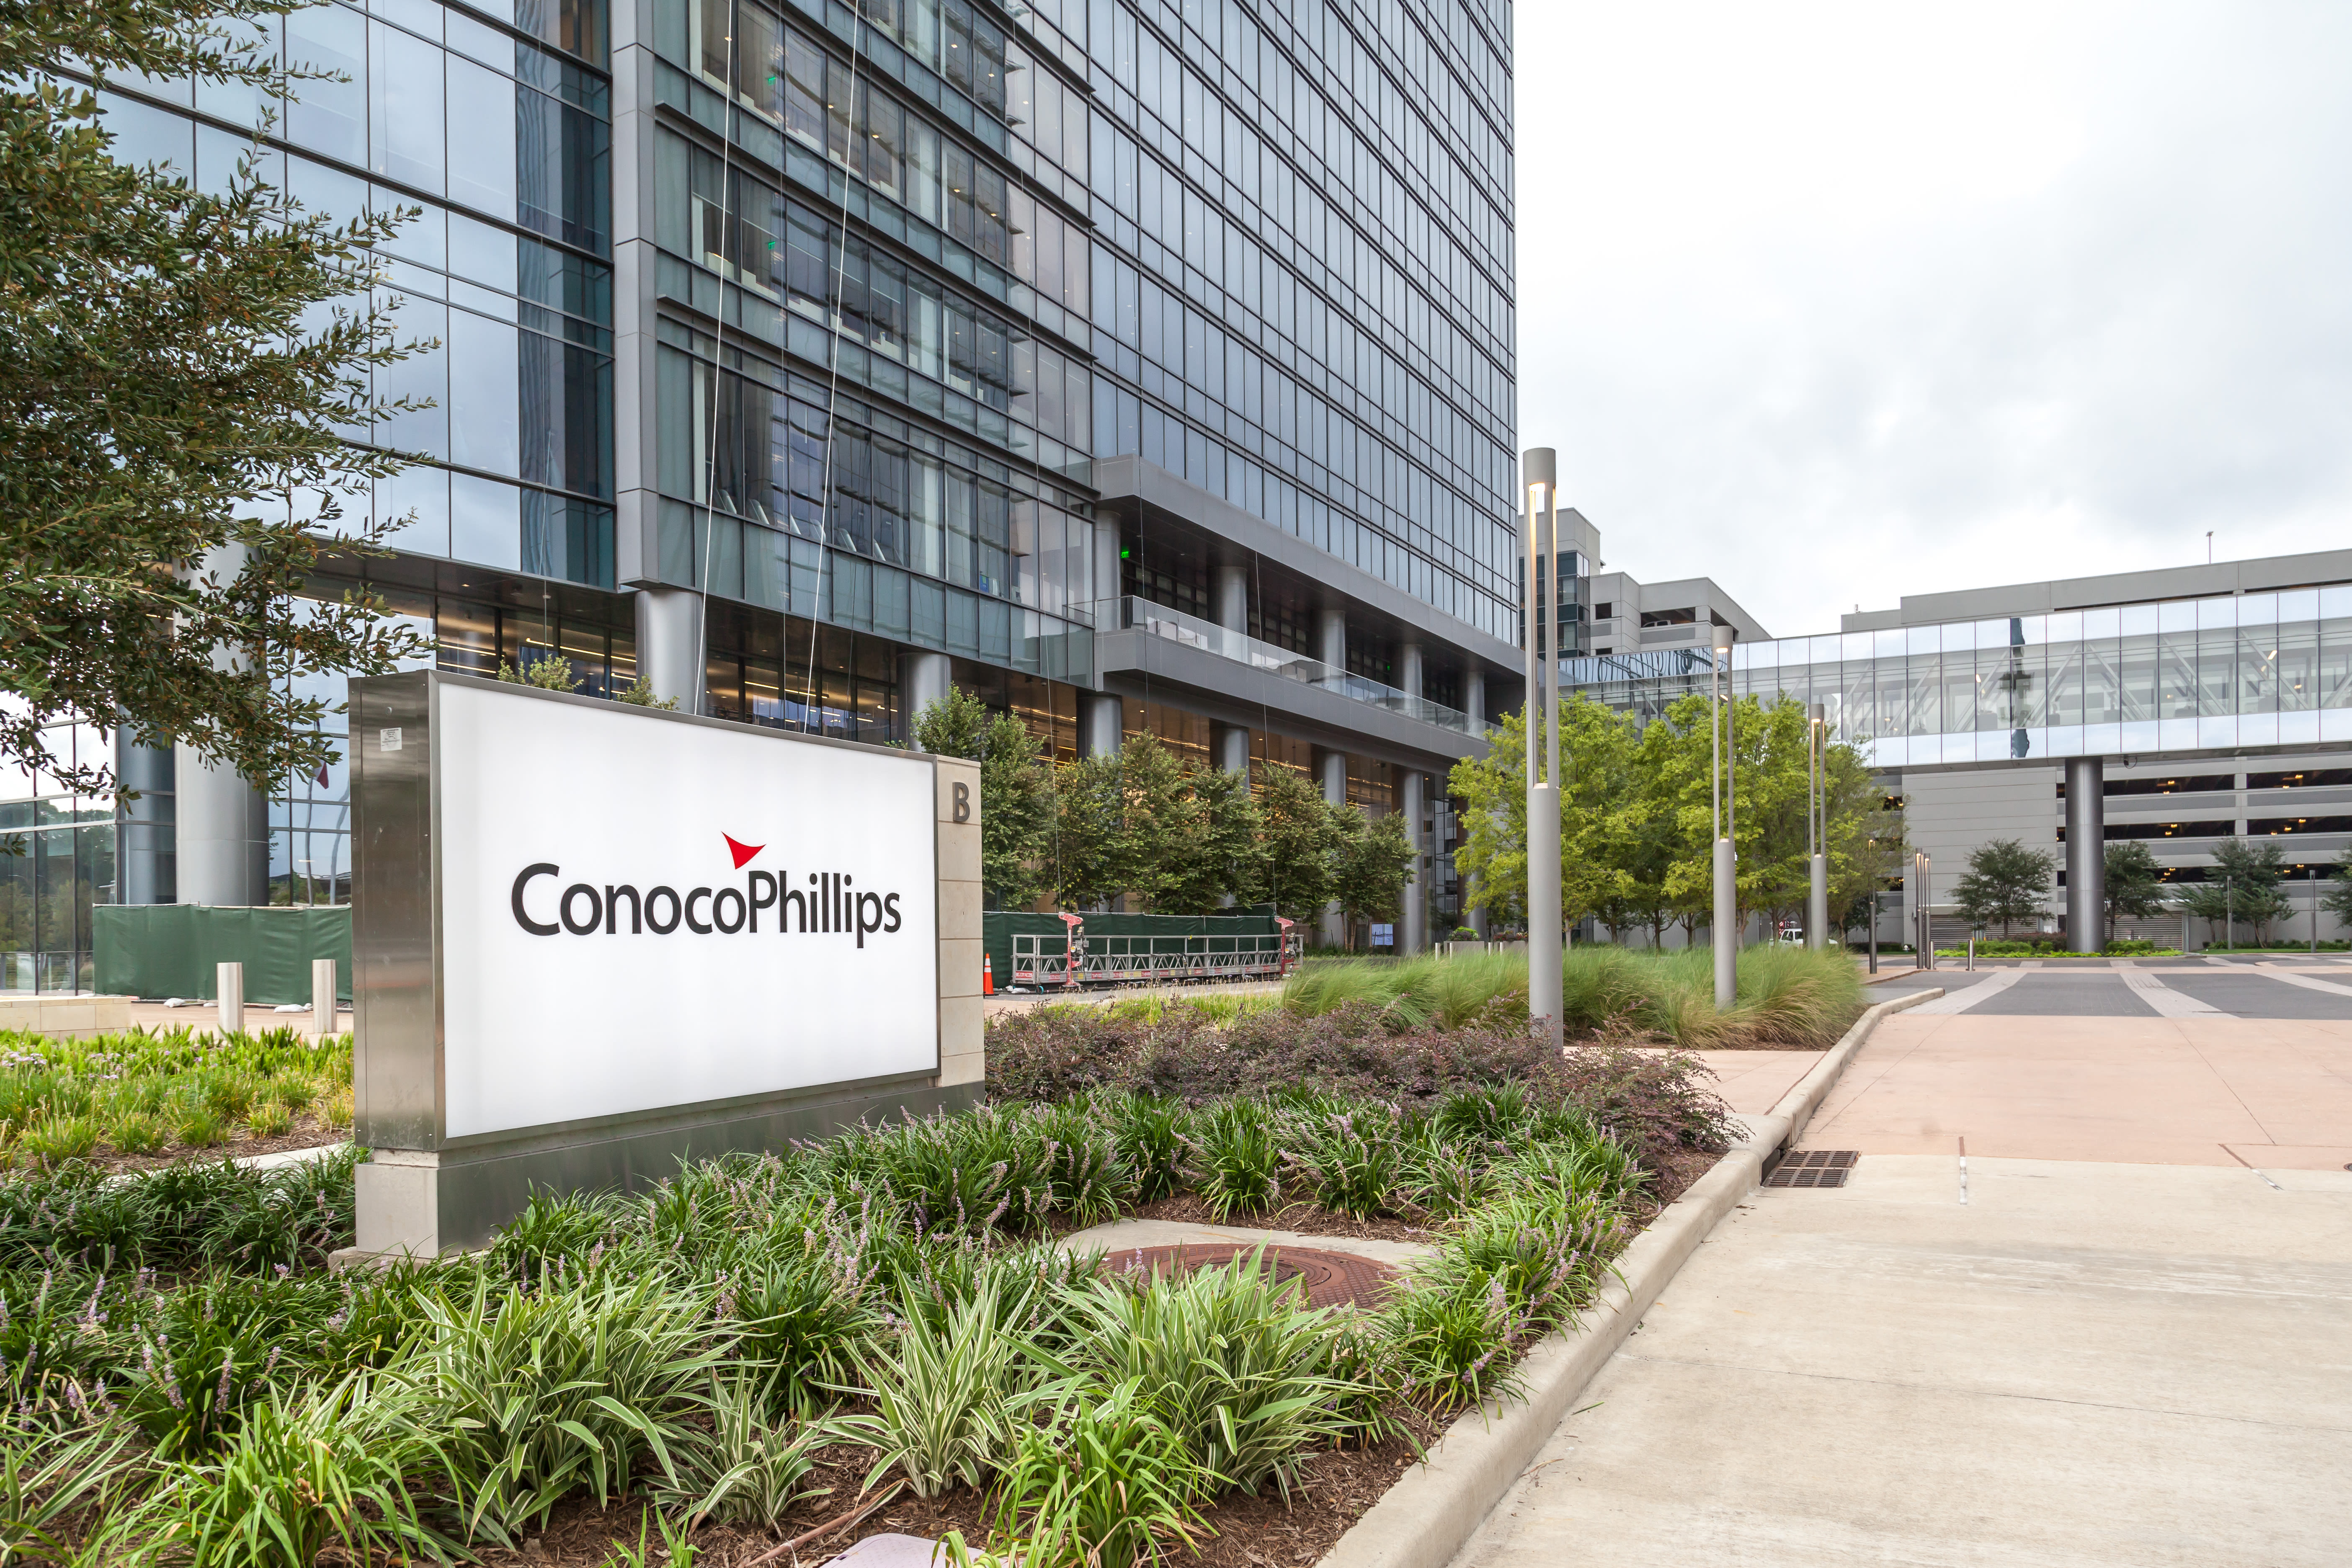 ConocoPhillips's $22.5 billion deal for Marathon Oil highlights energy M&A wave